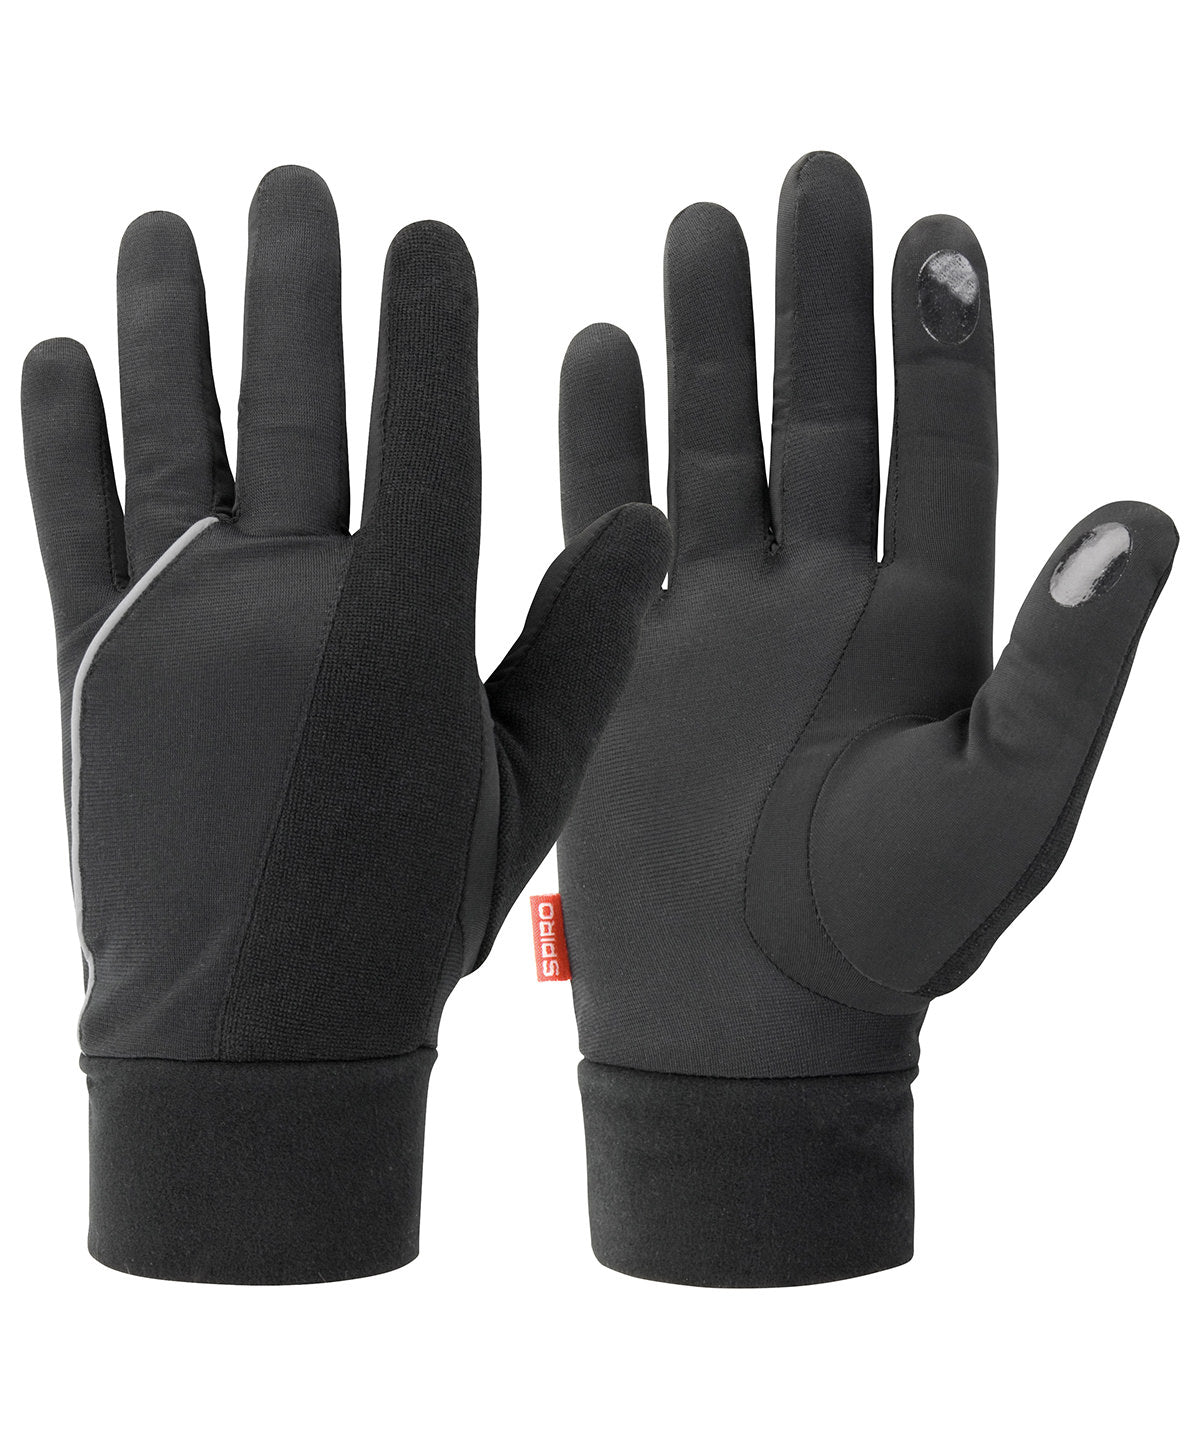 Hanska - Elite Running Gloves